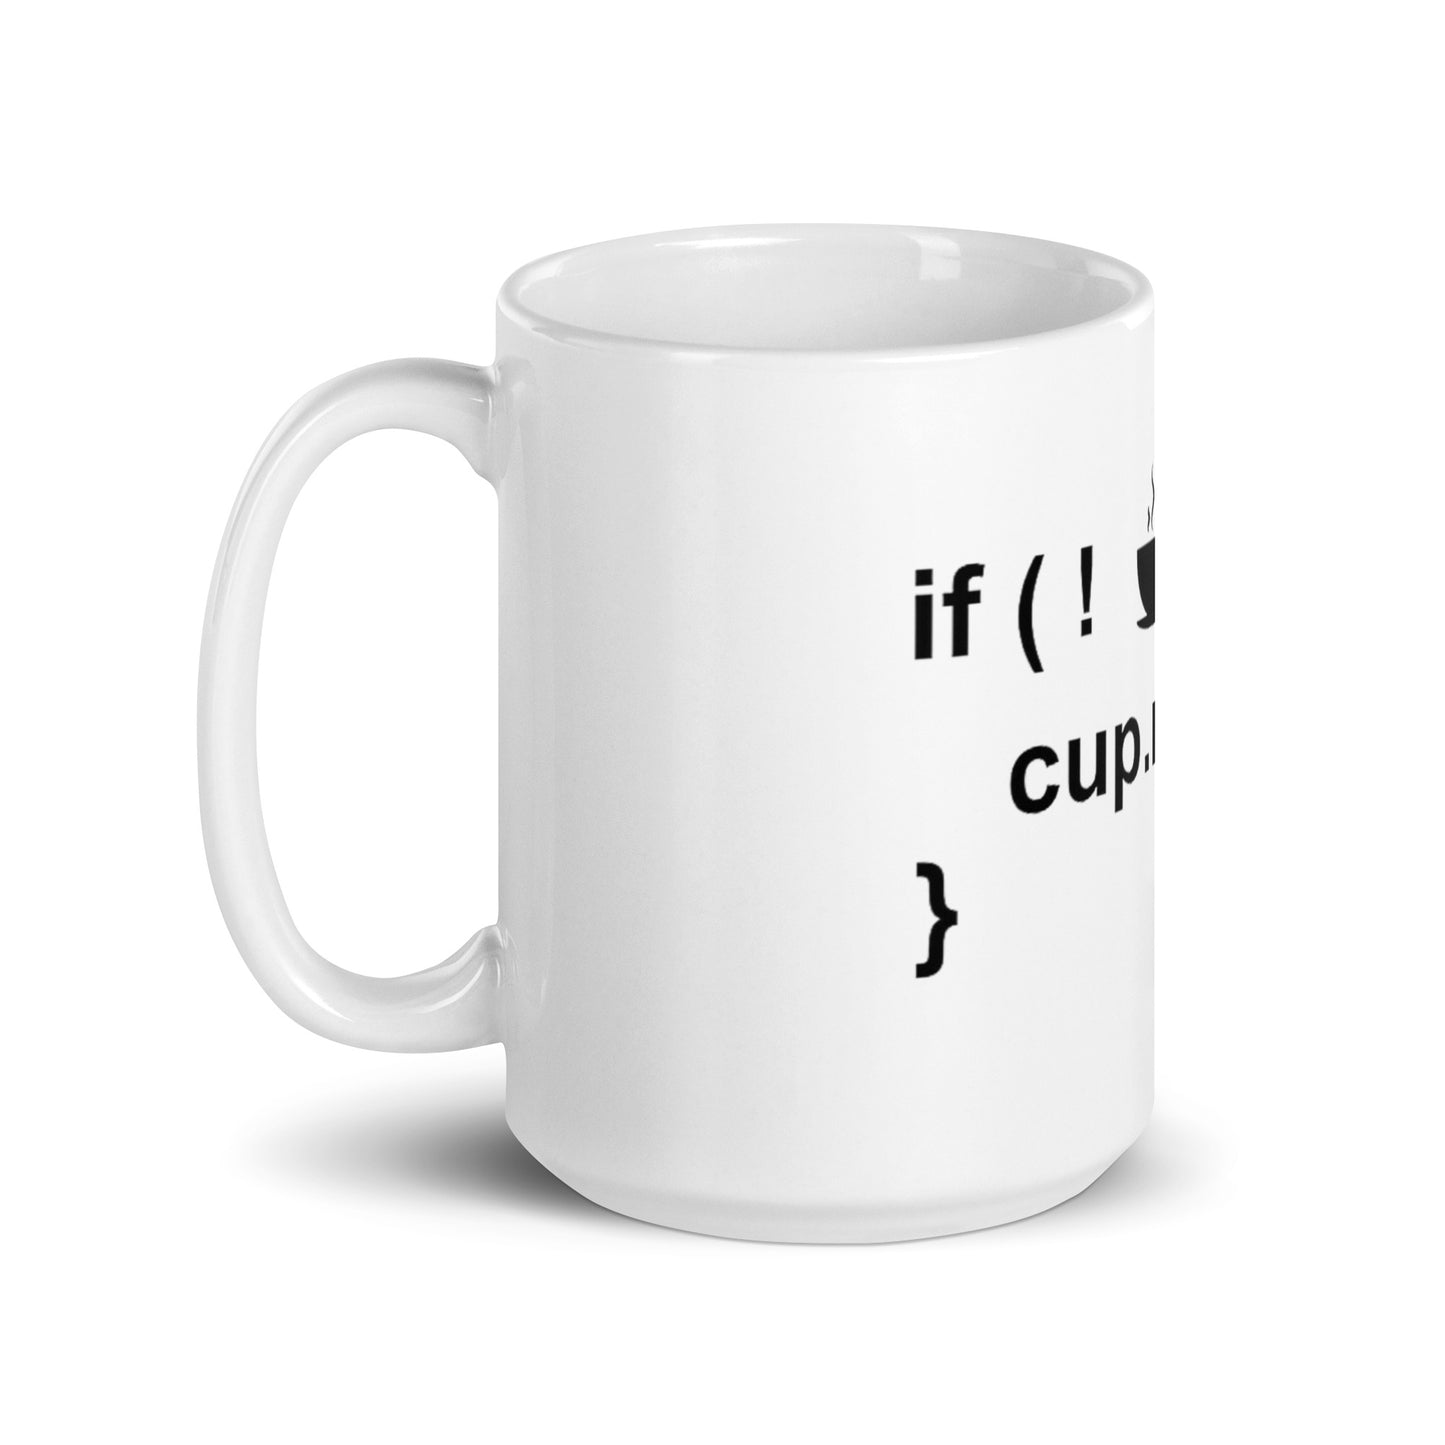 Cup.Refill glossy mug